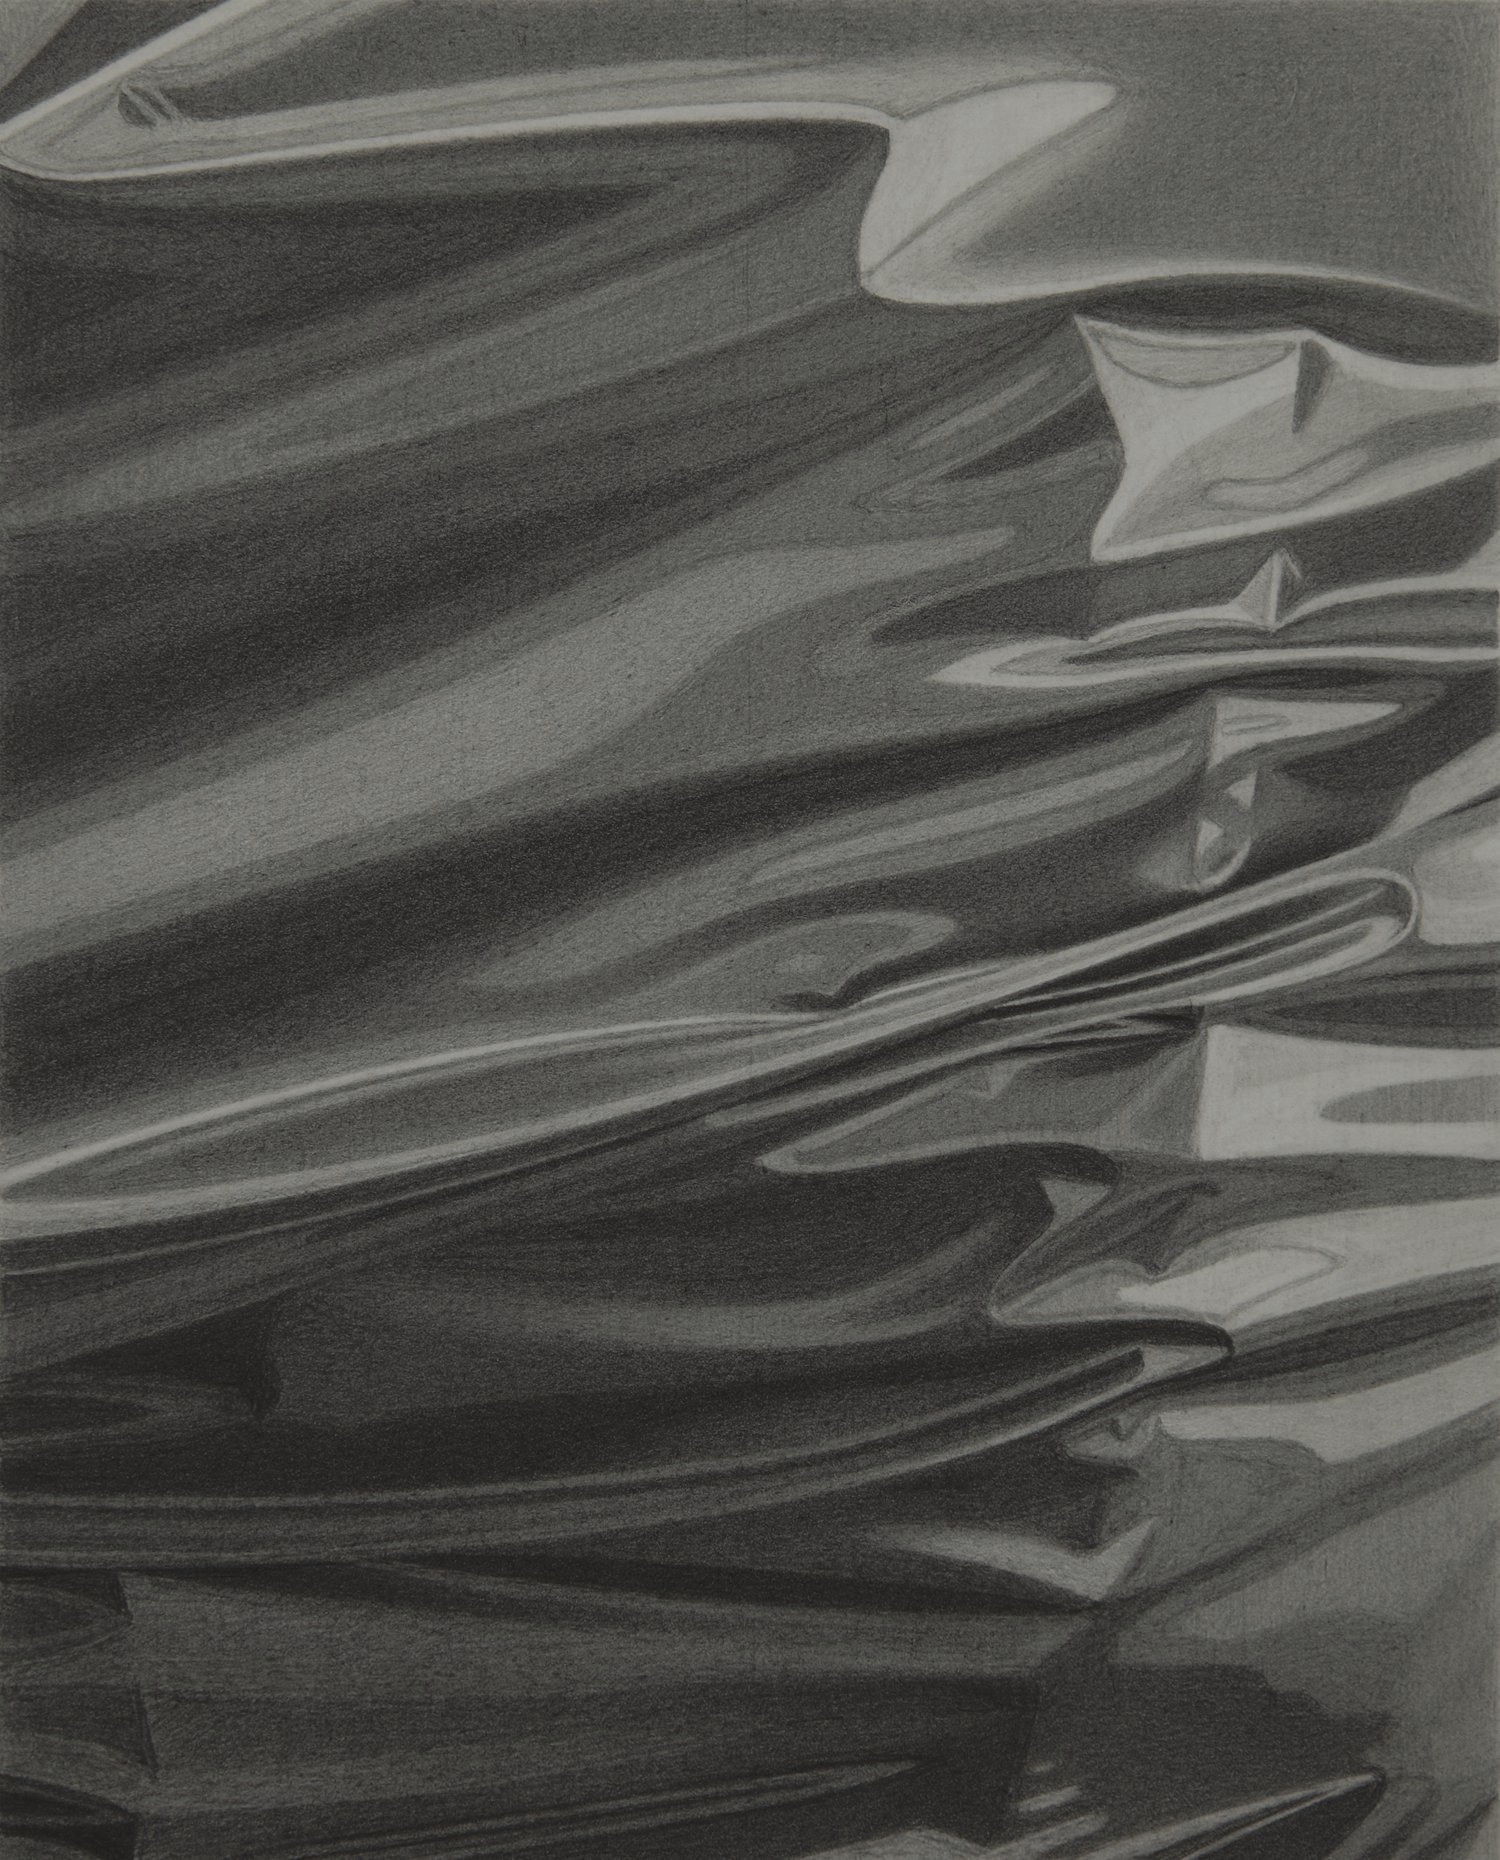  Plastic 4  10x8”, graphite on paper, 2012   